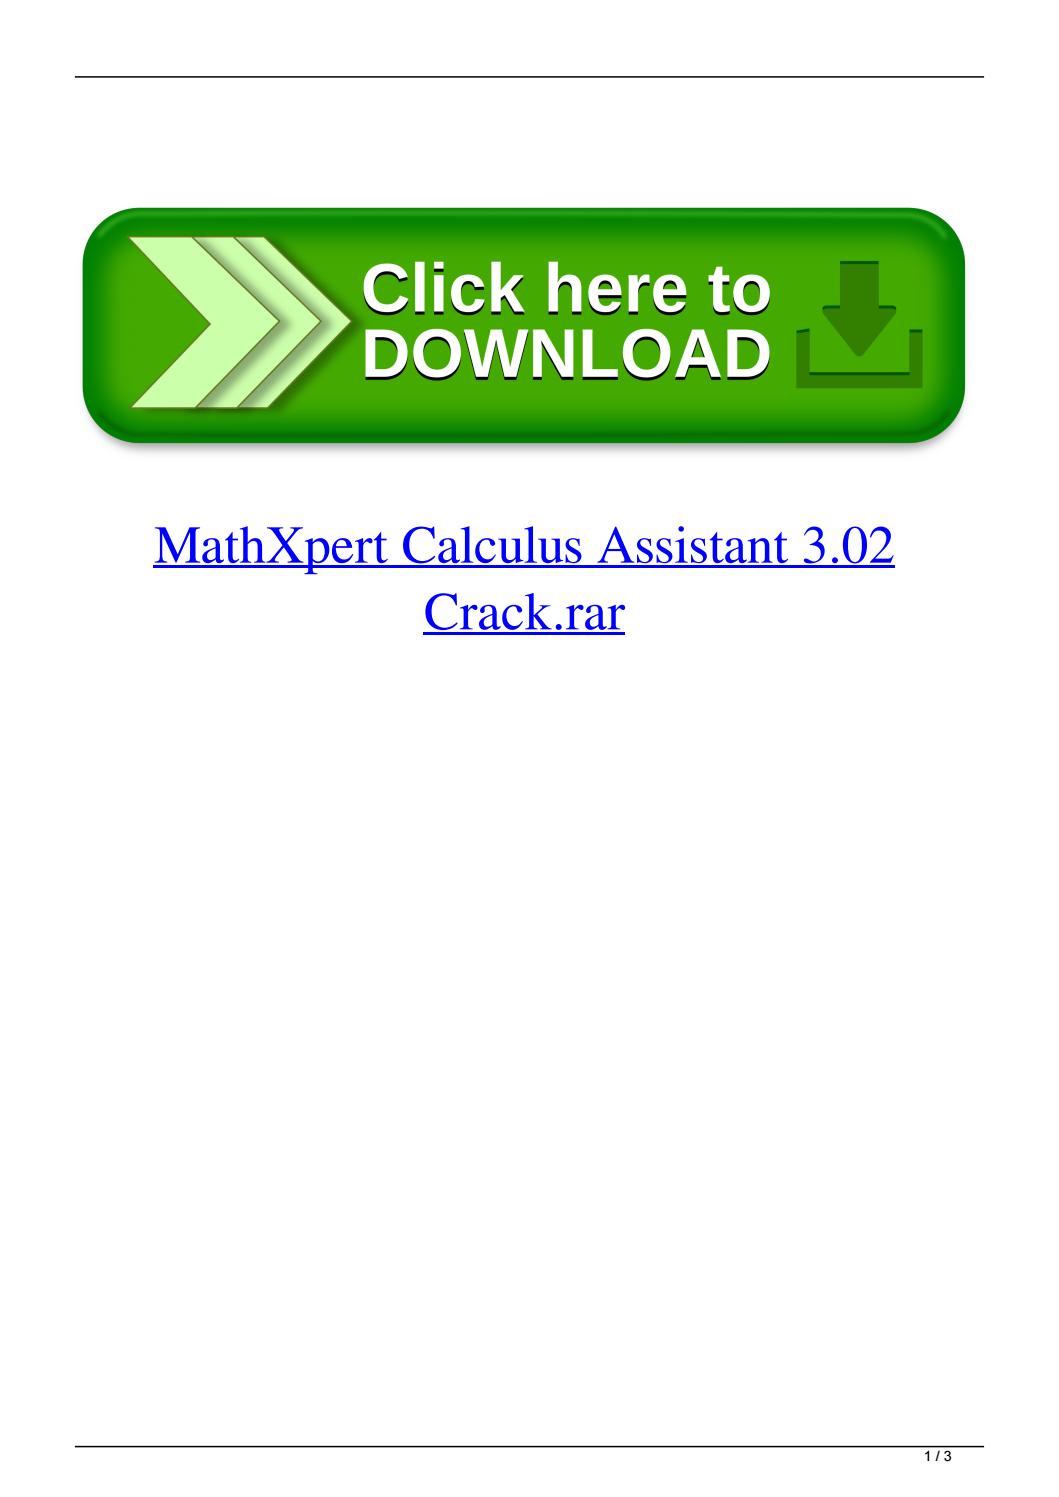 Mathxpert Calculus Assistant V3.02 Download